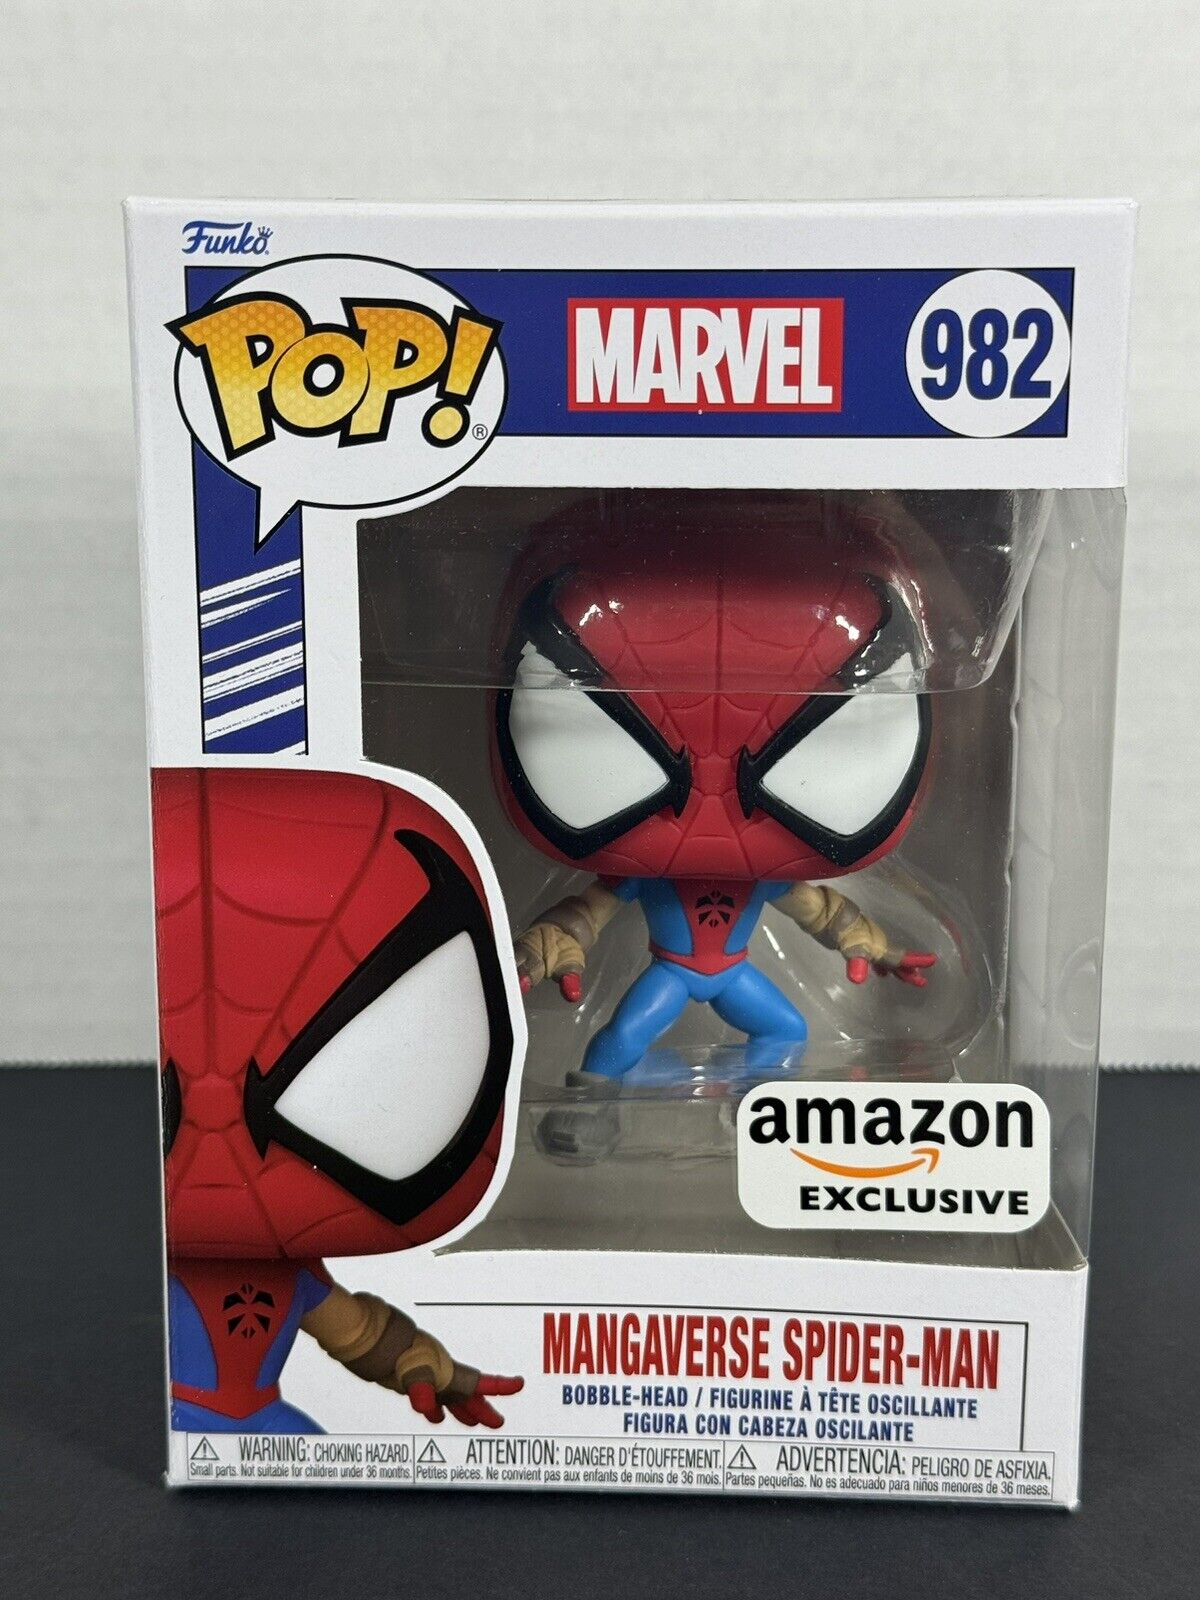 Funko Pop Vinyl: Marvel - Mangaverse Spider-Man - Amazon (Exclusive) #982